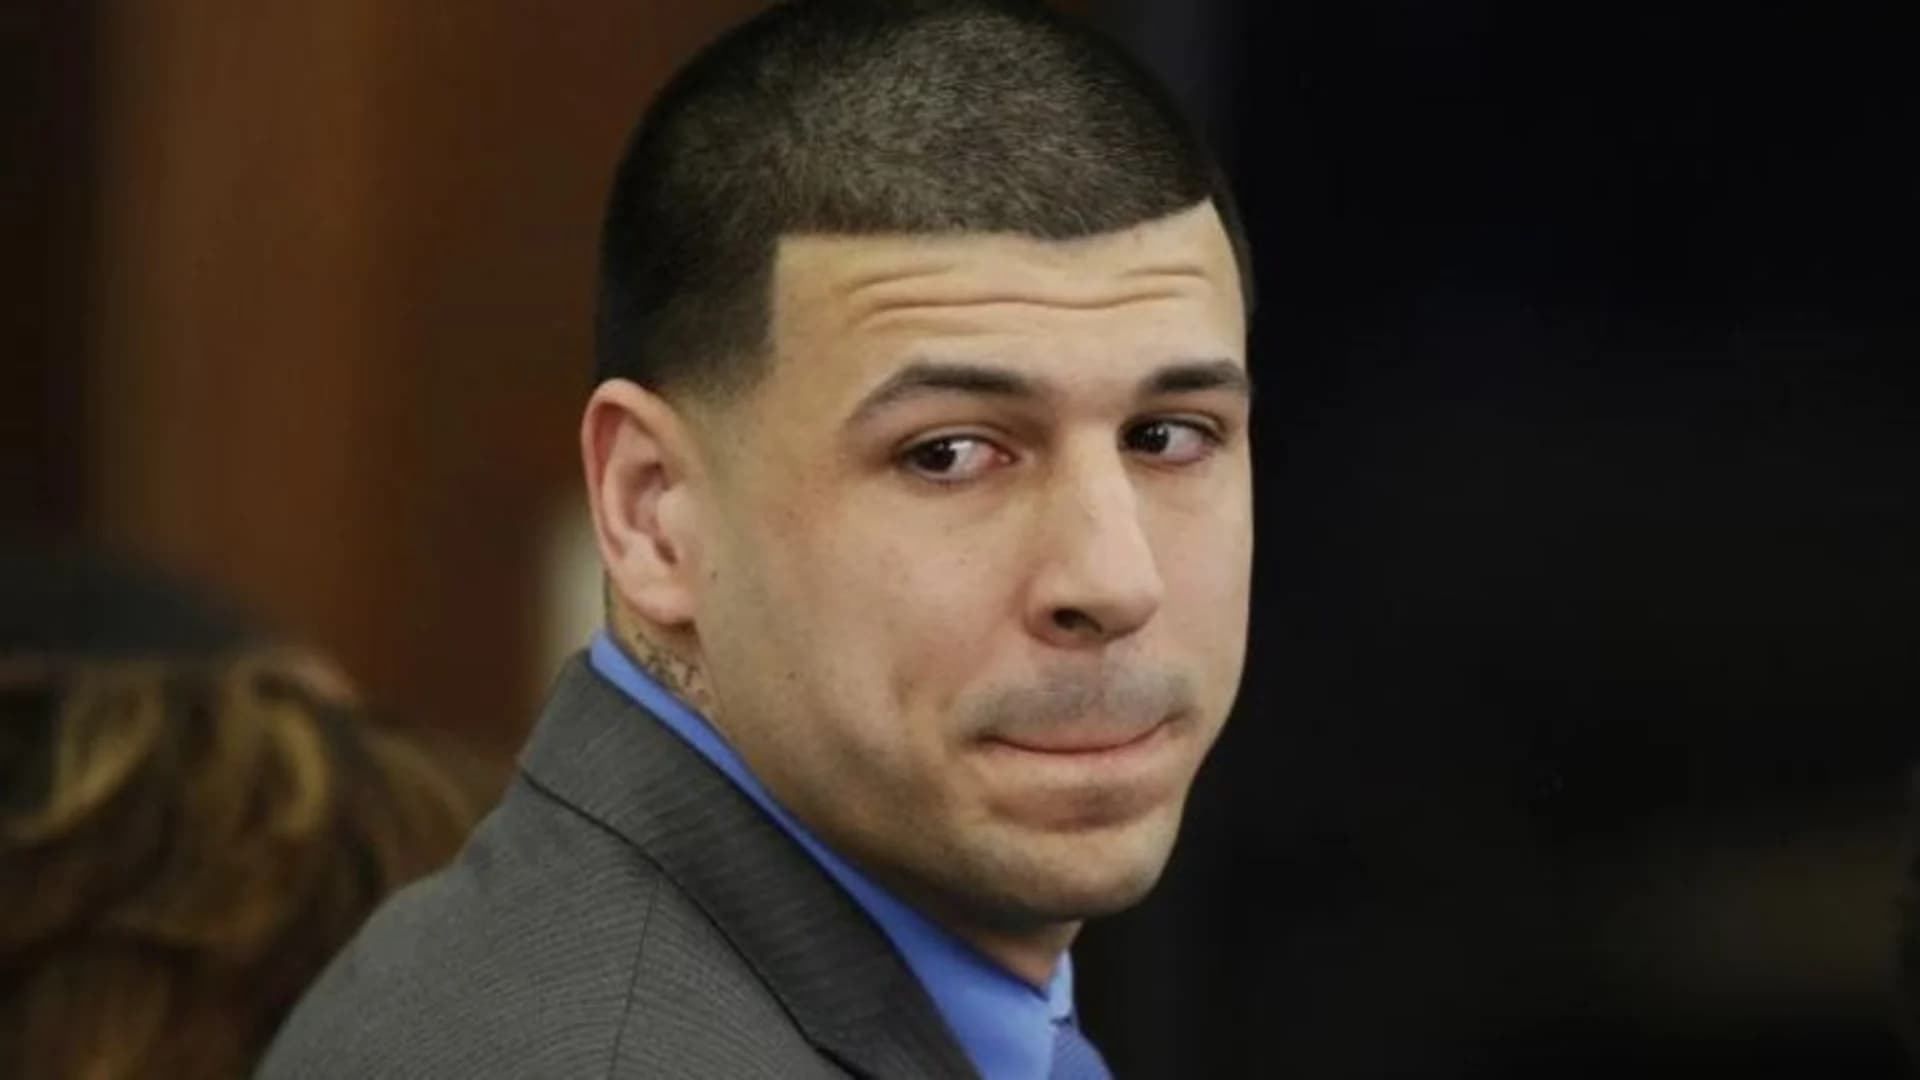 Ex-NFL star Aaron Hernandez dead after hanging self in cell